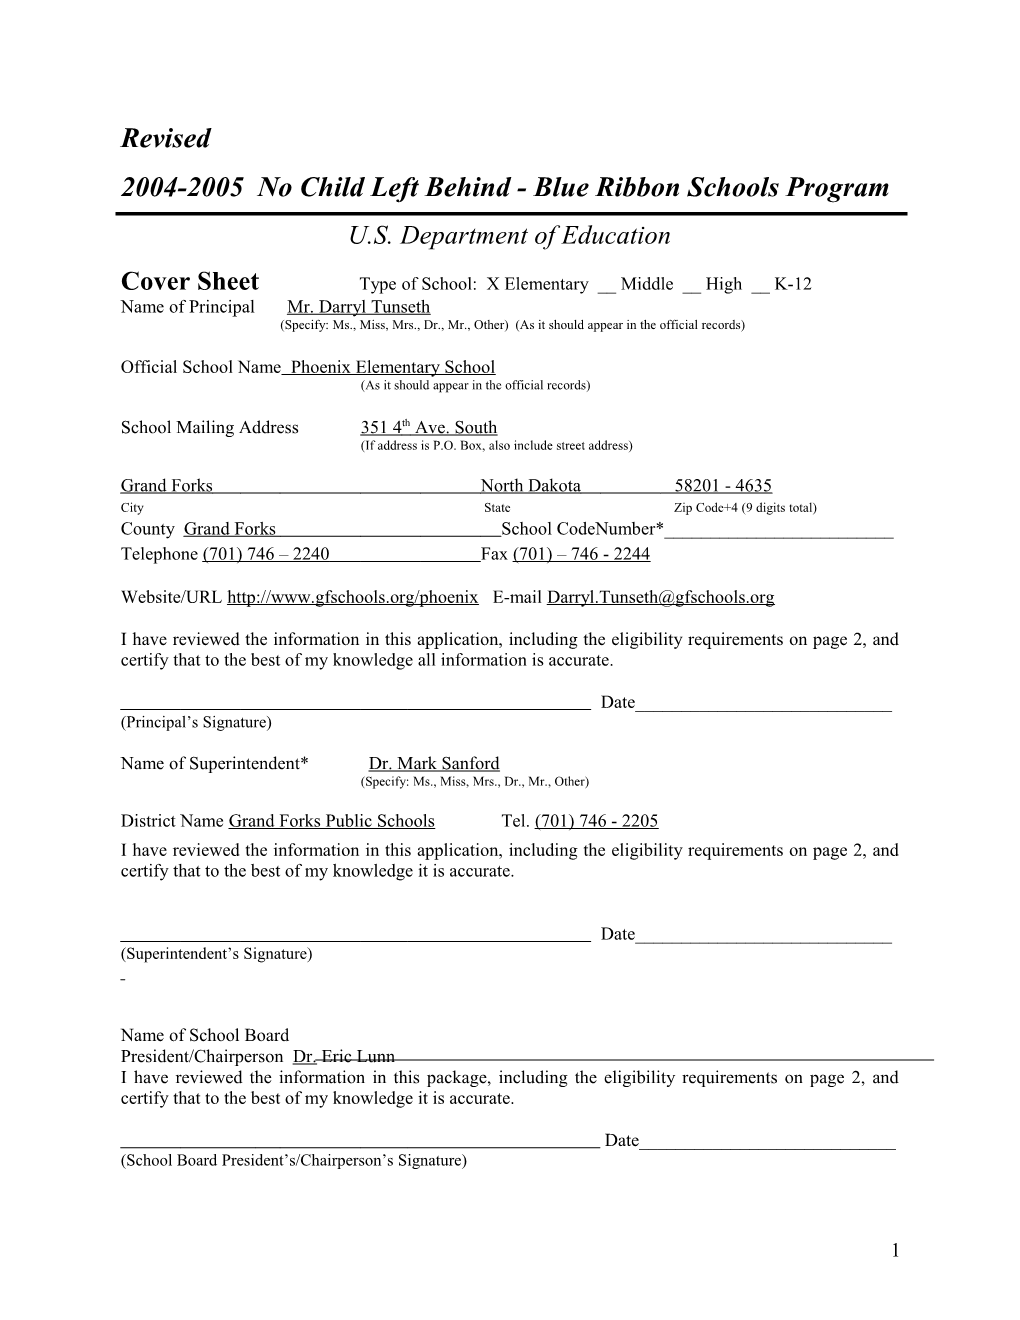 Phoenix Elementary School Application: 2004-2005, No Child Left Behind - Blue Ribbon Schools